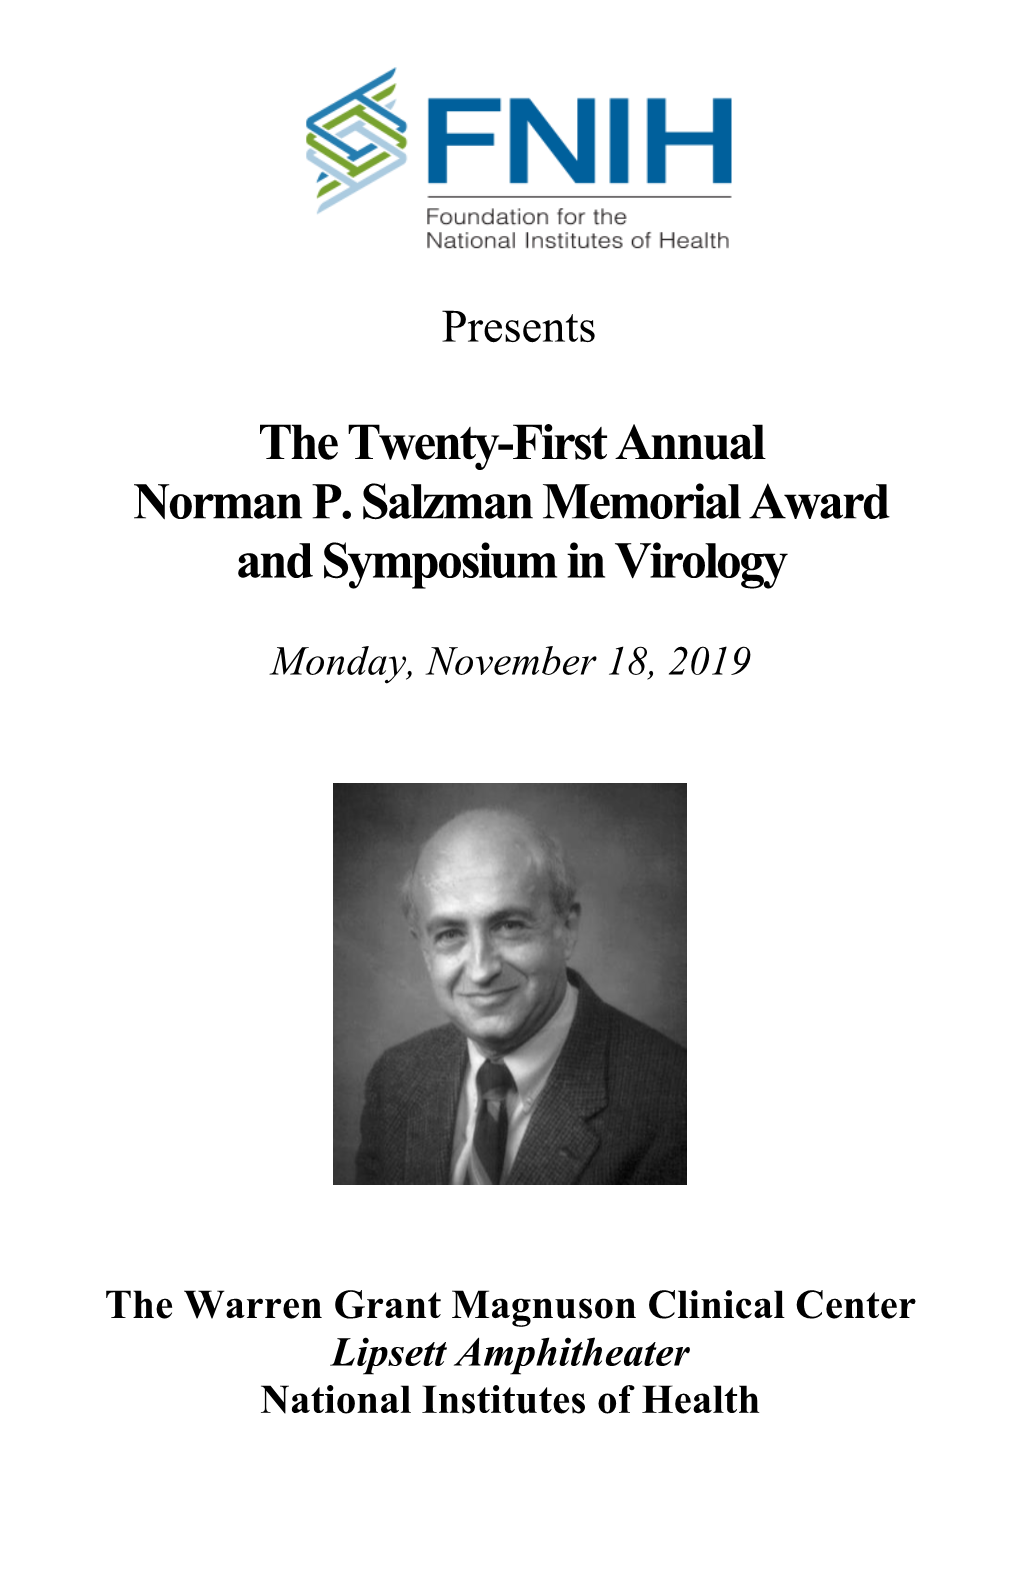 The Twenty-First Annual Norman P. Salzman Memorial Award and Symposium in Virology